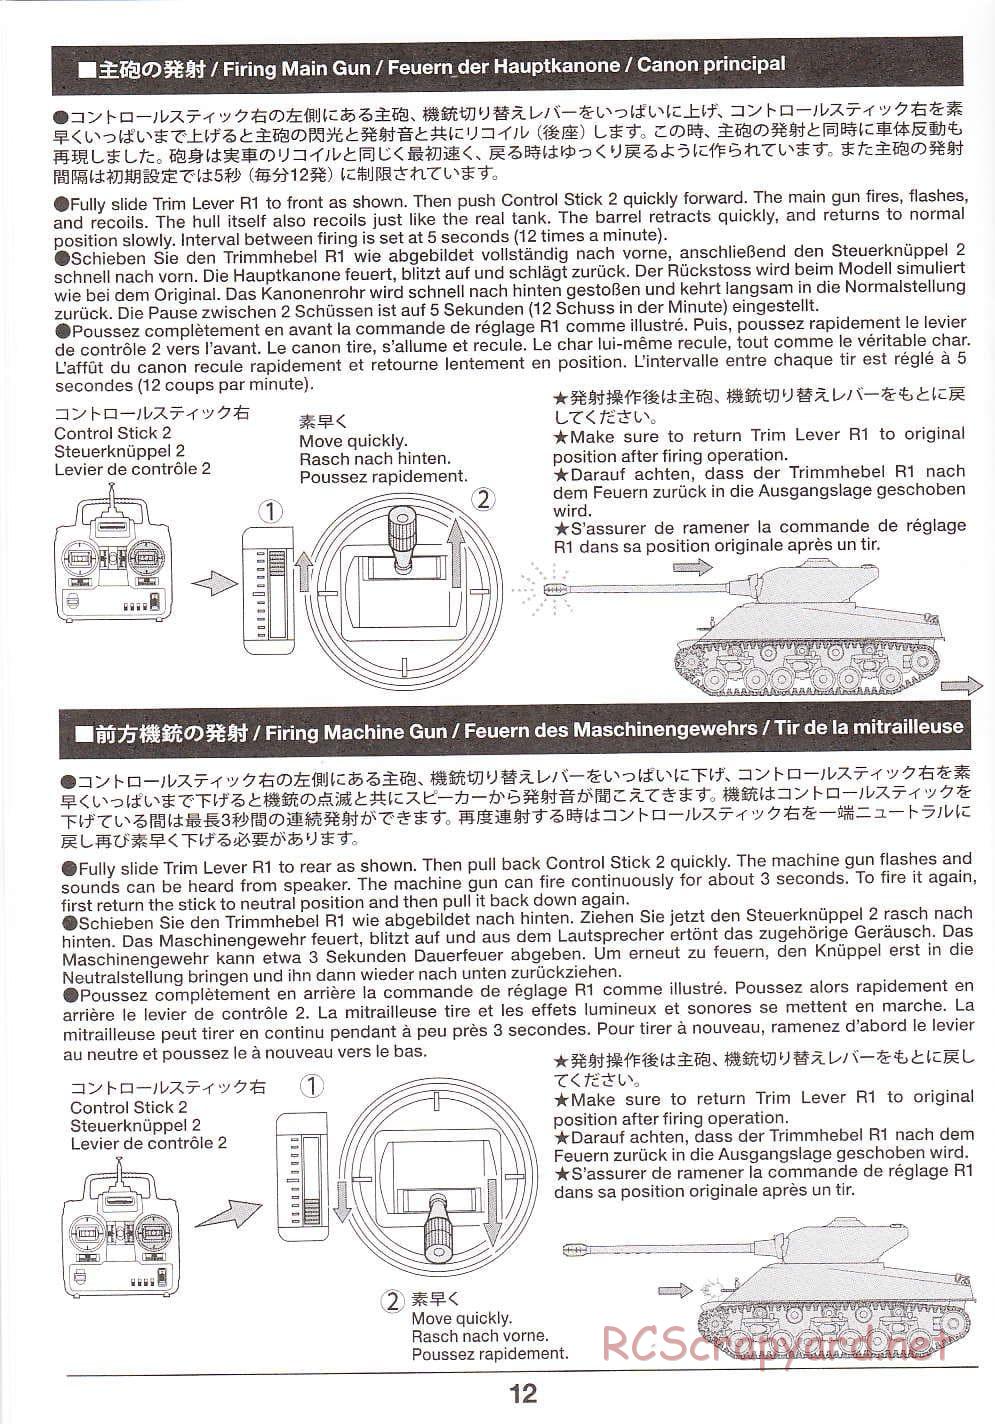 Tamiya - Super Sherman M-51 - 1/16 Scale Chassis - Operation Manual - Page 12